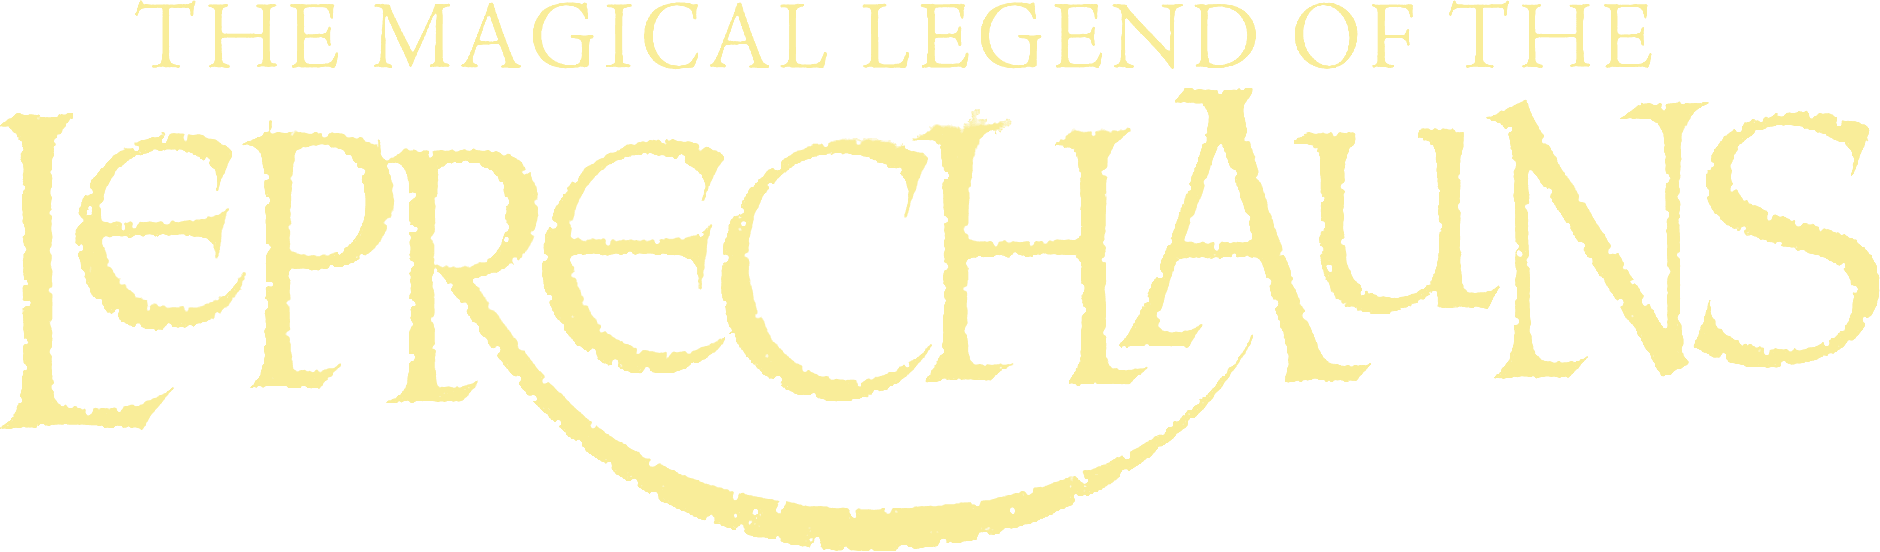 The Magical Legend of the Leprechauns logo